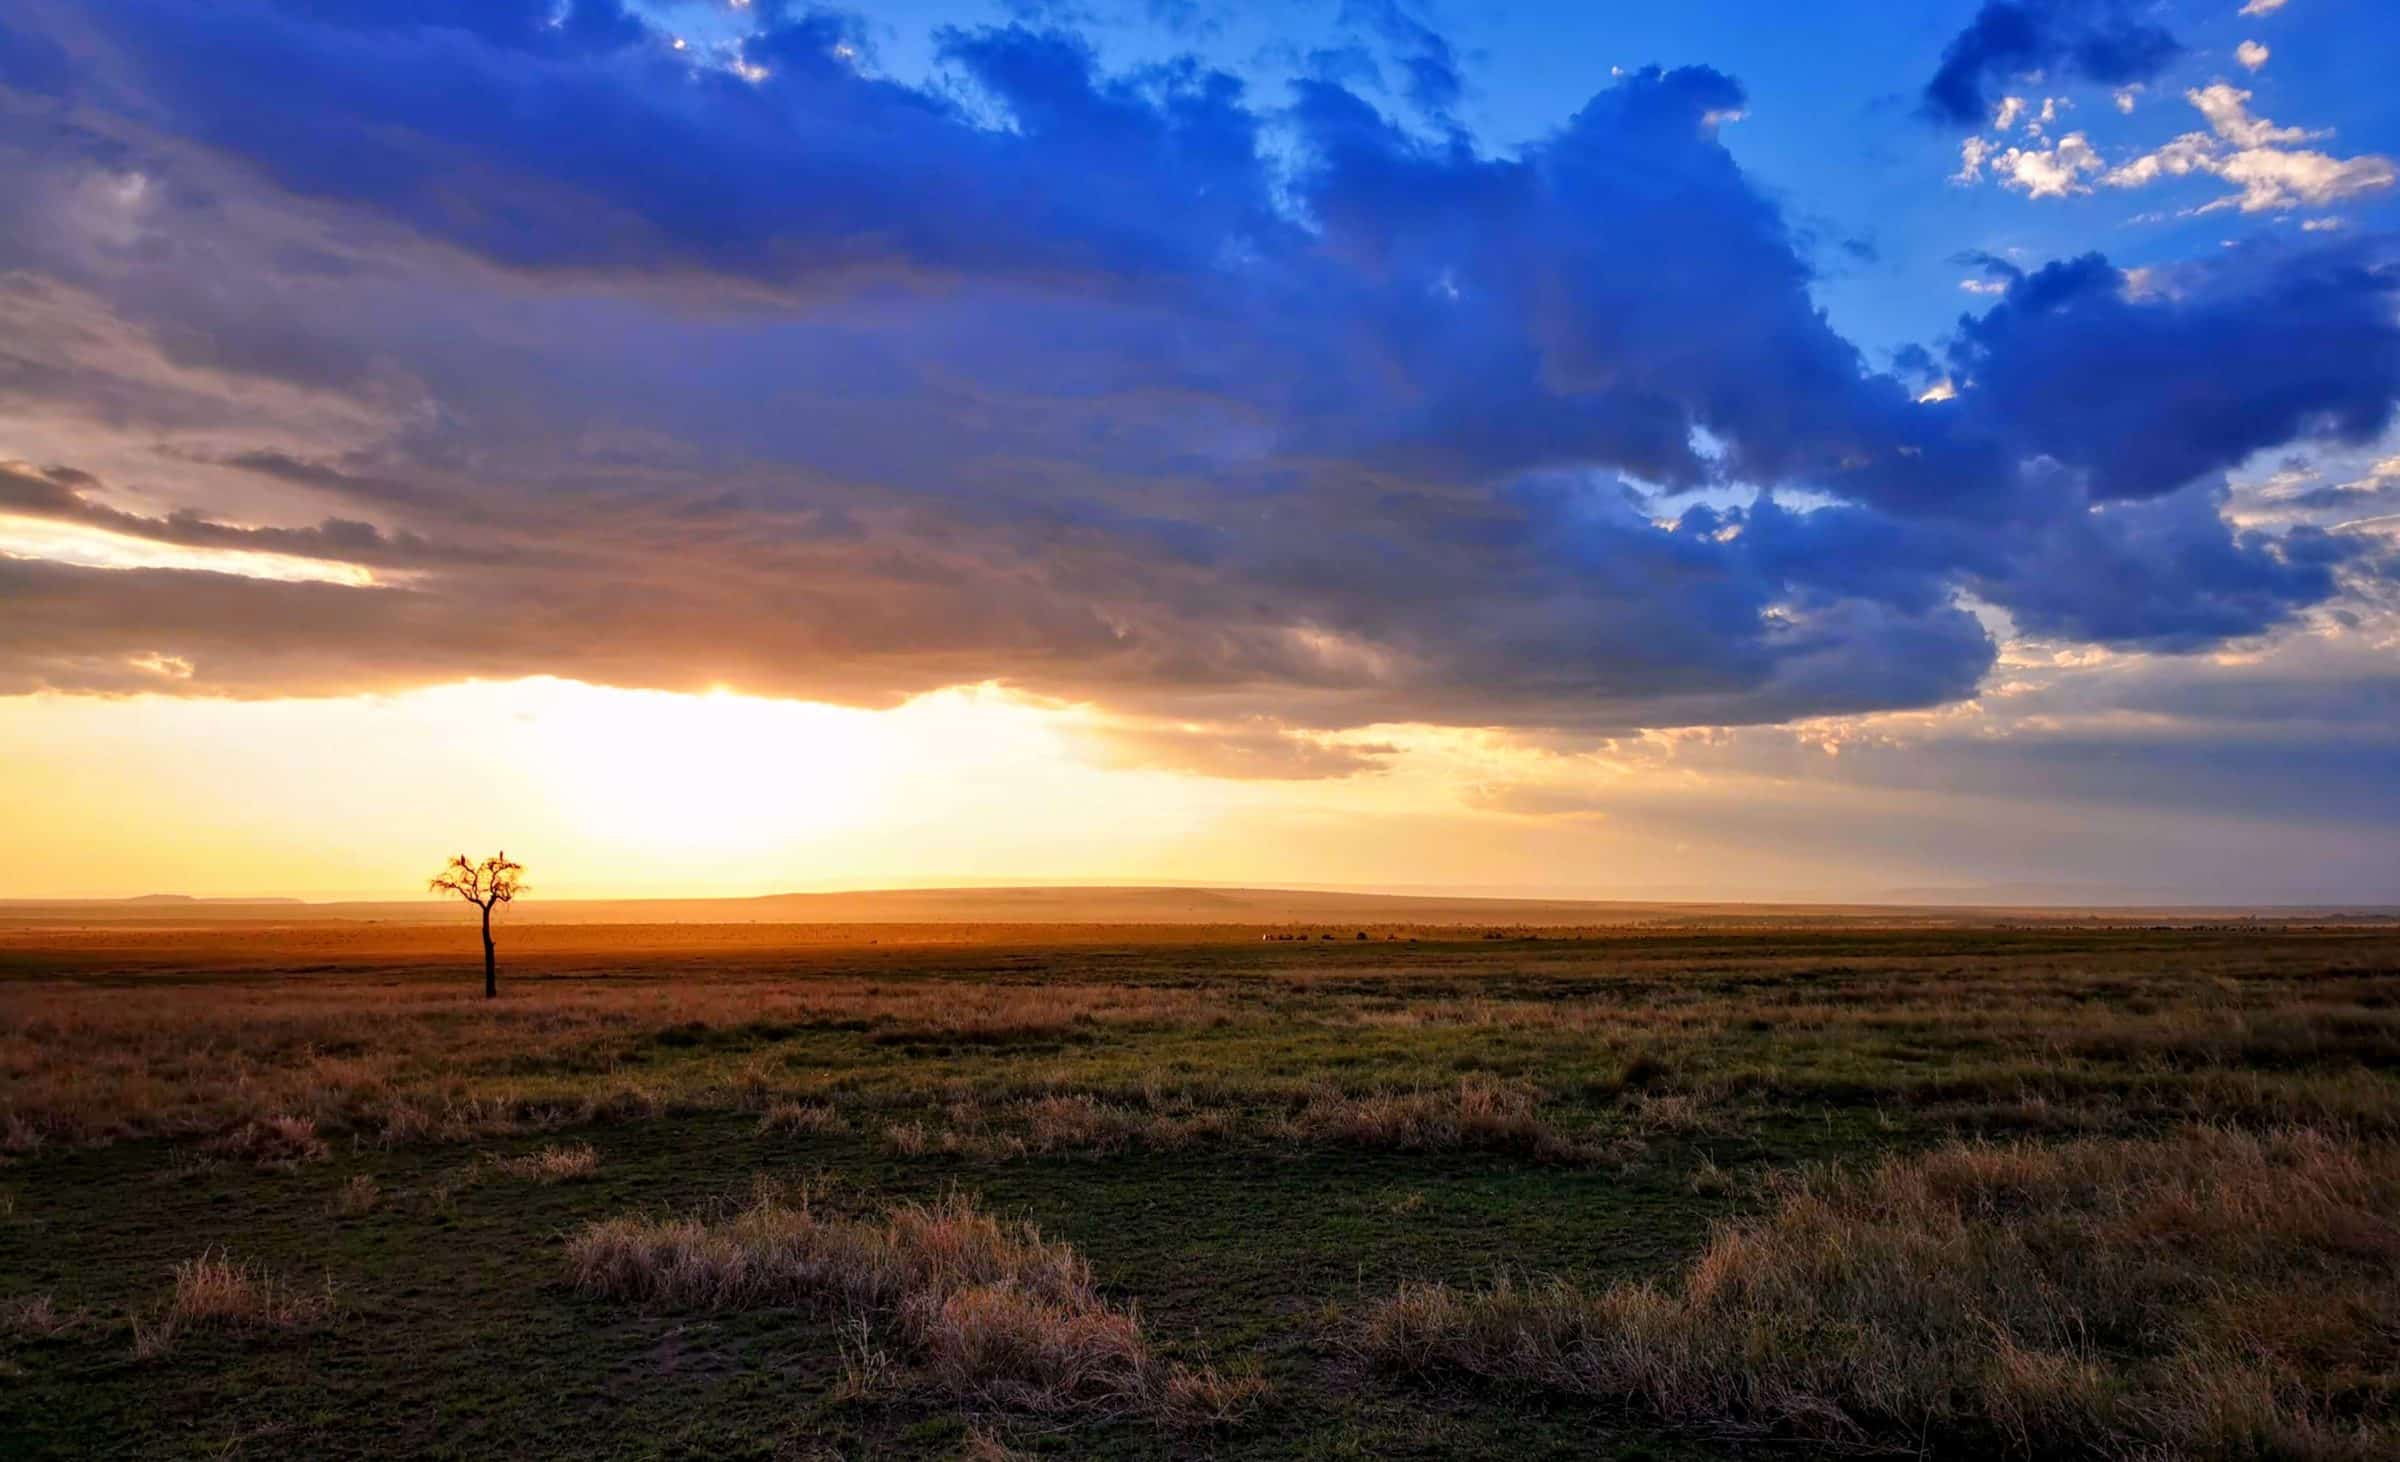 Grote wolkenpartijen, verdwaalde bomen en wat dieren in de achtergrond. Just another day in Masai Mara